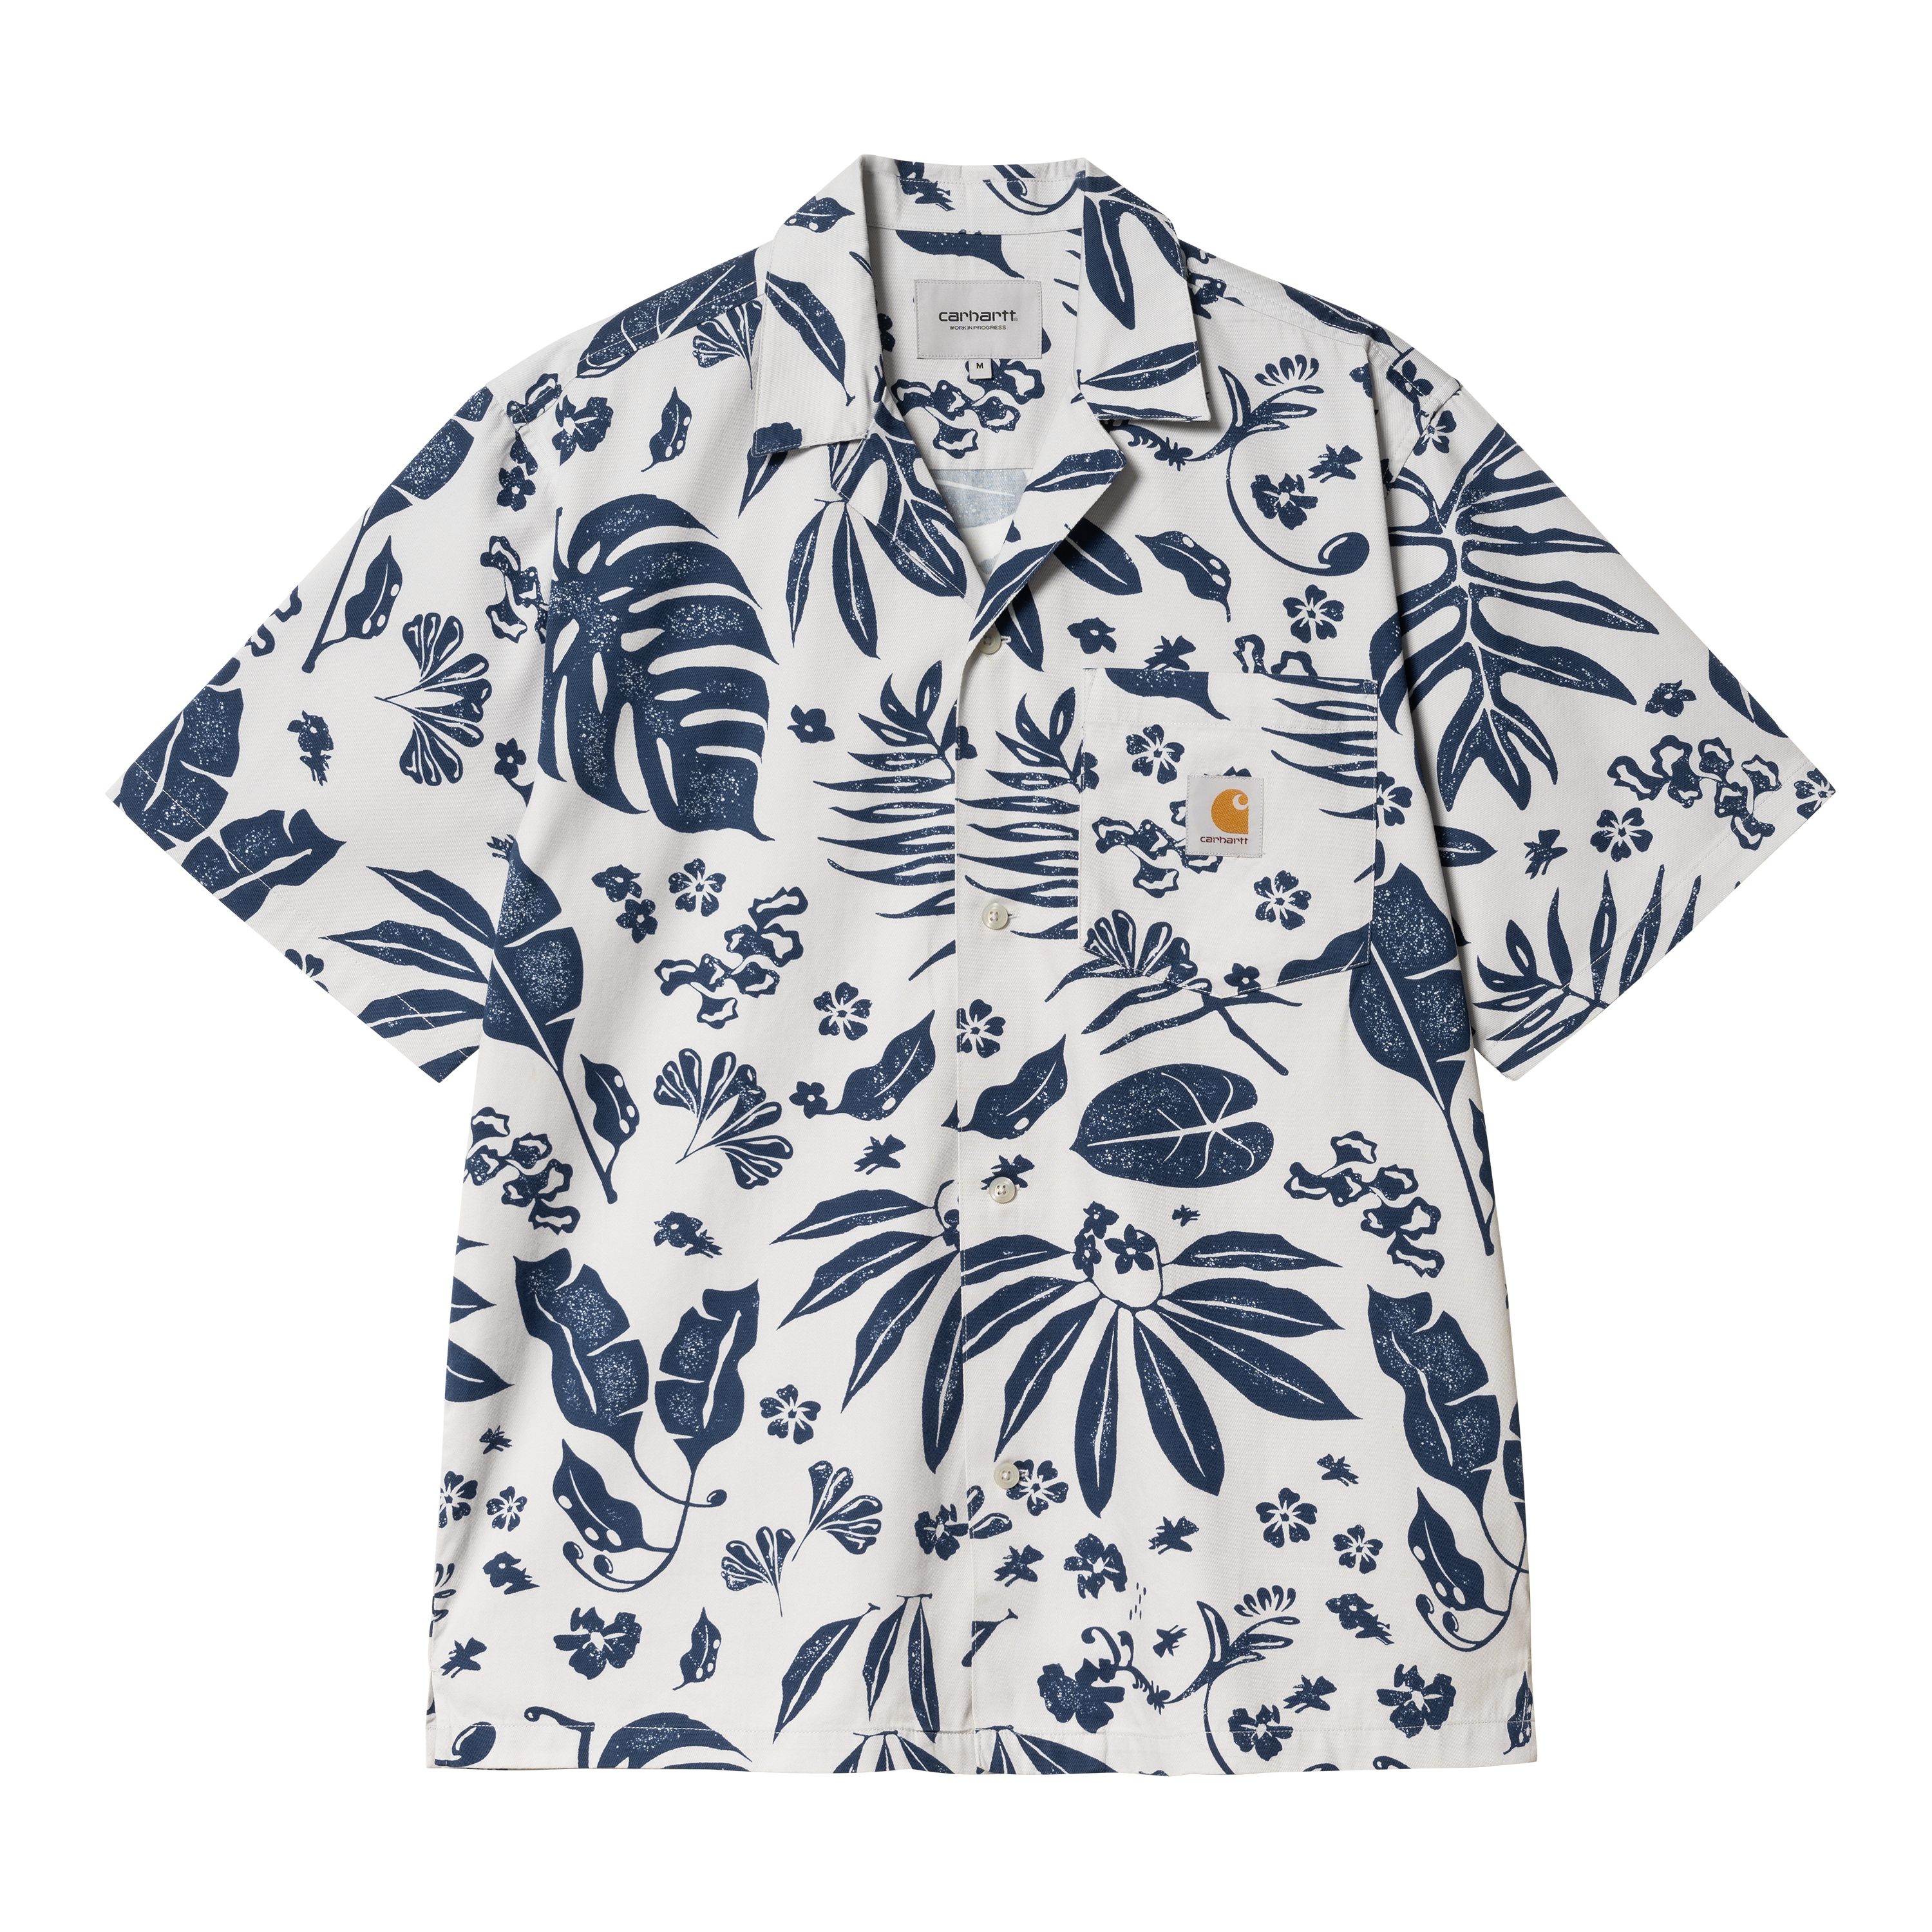 Carhartt WIP Short Sleeve Woodblock Shirt in Multicolor